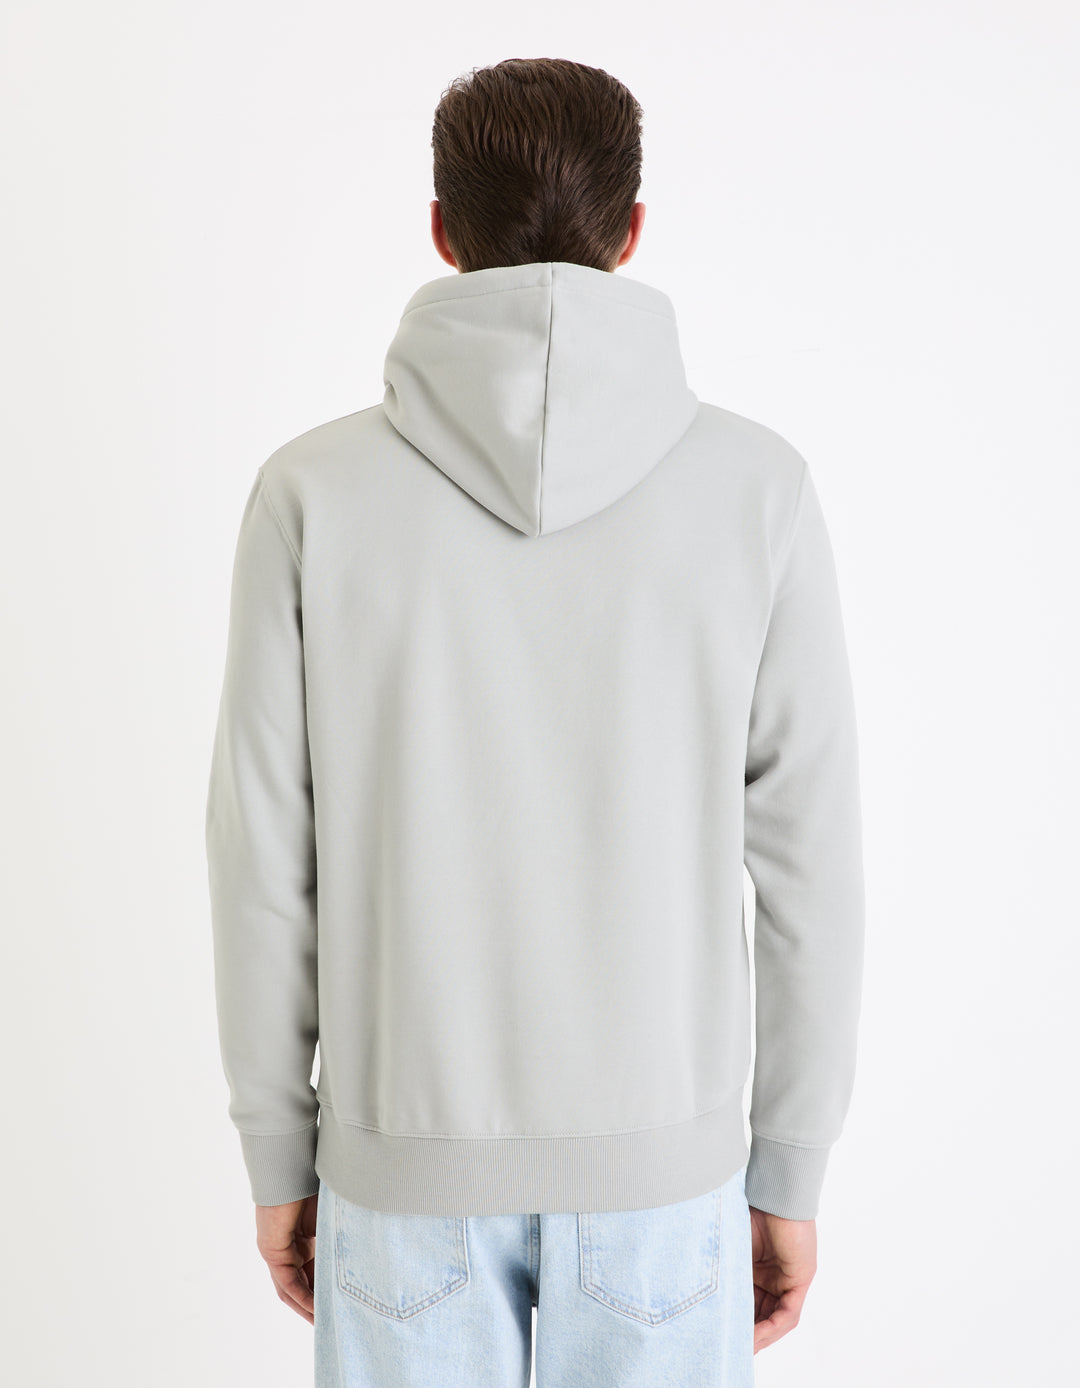 Unisex - Knitted - Sweatshirt - Long sleeves